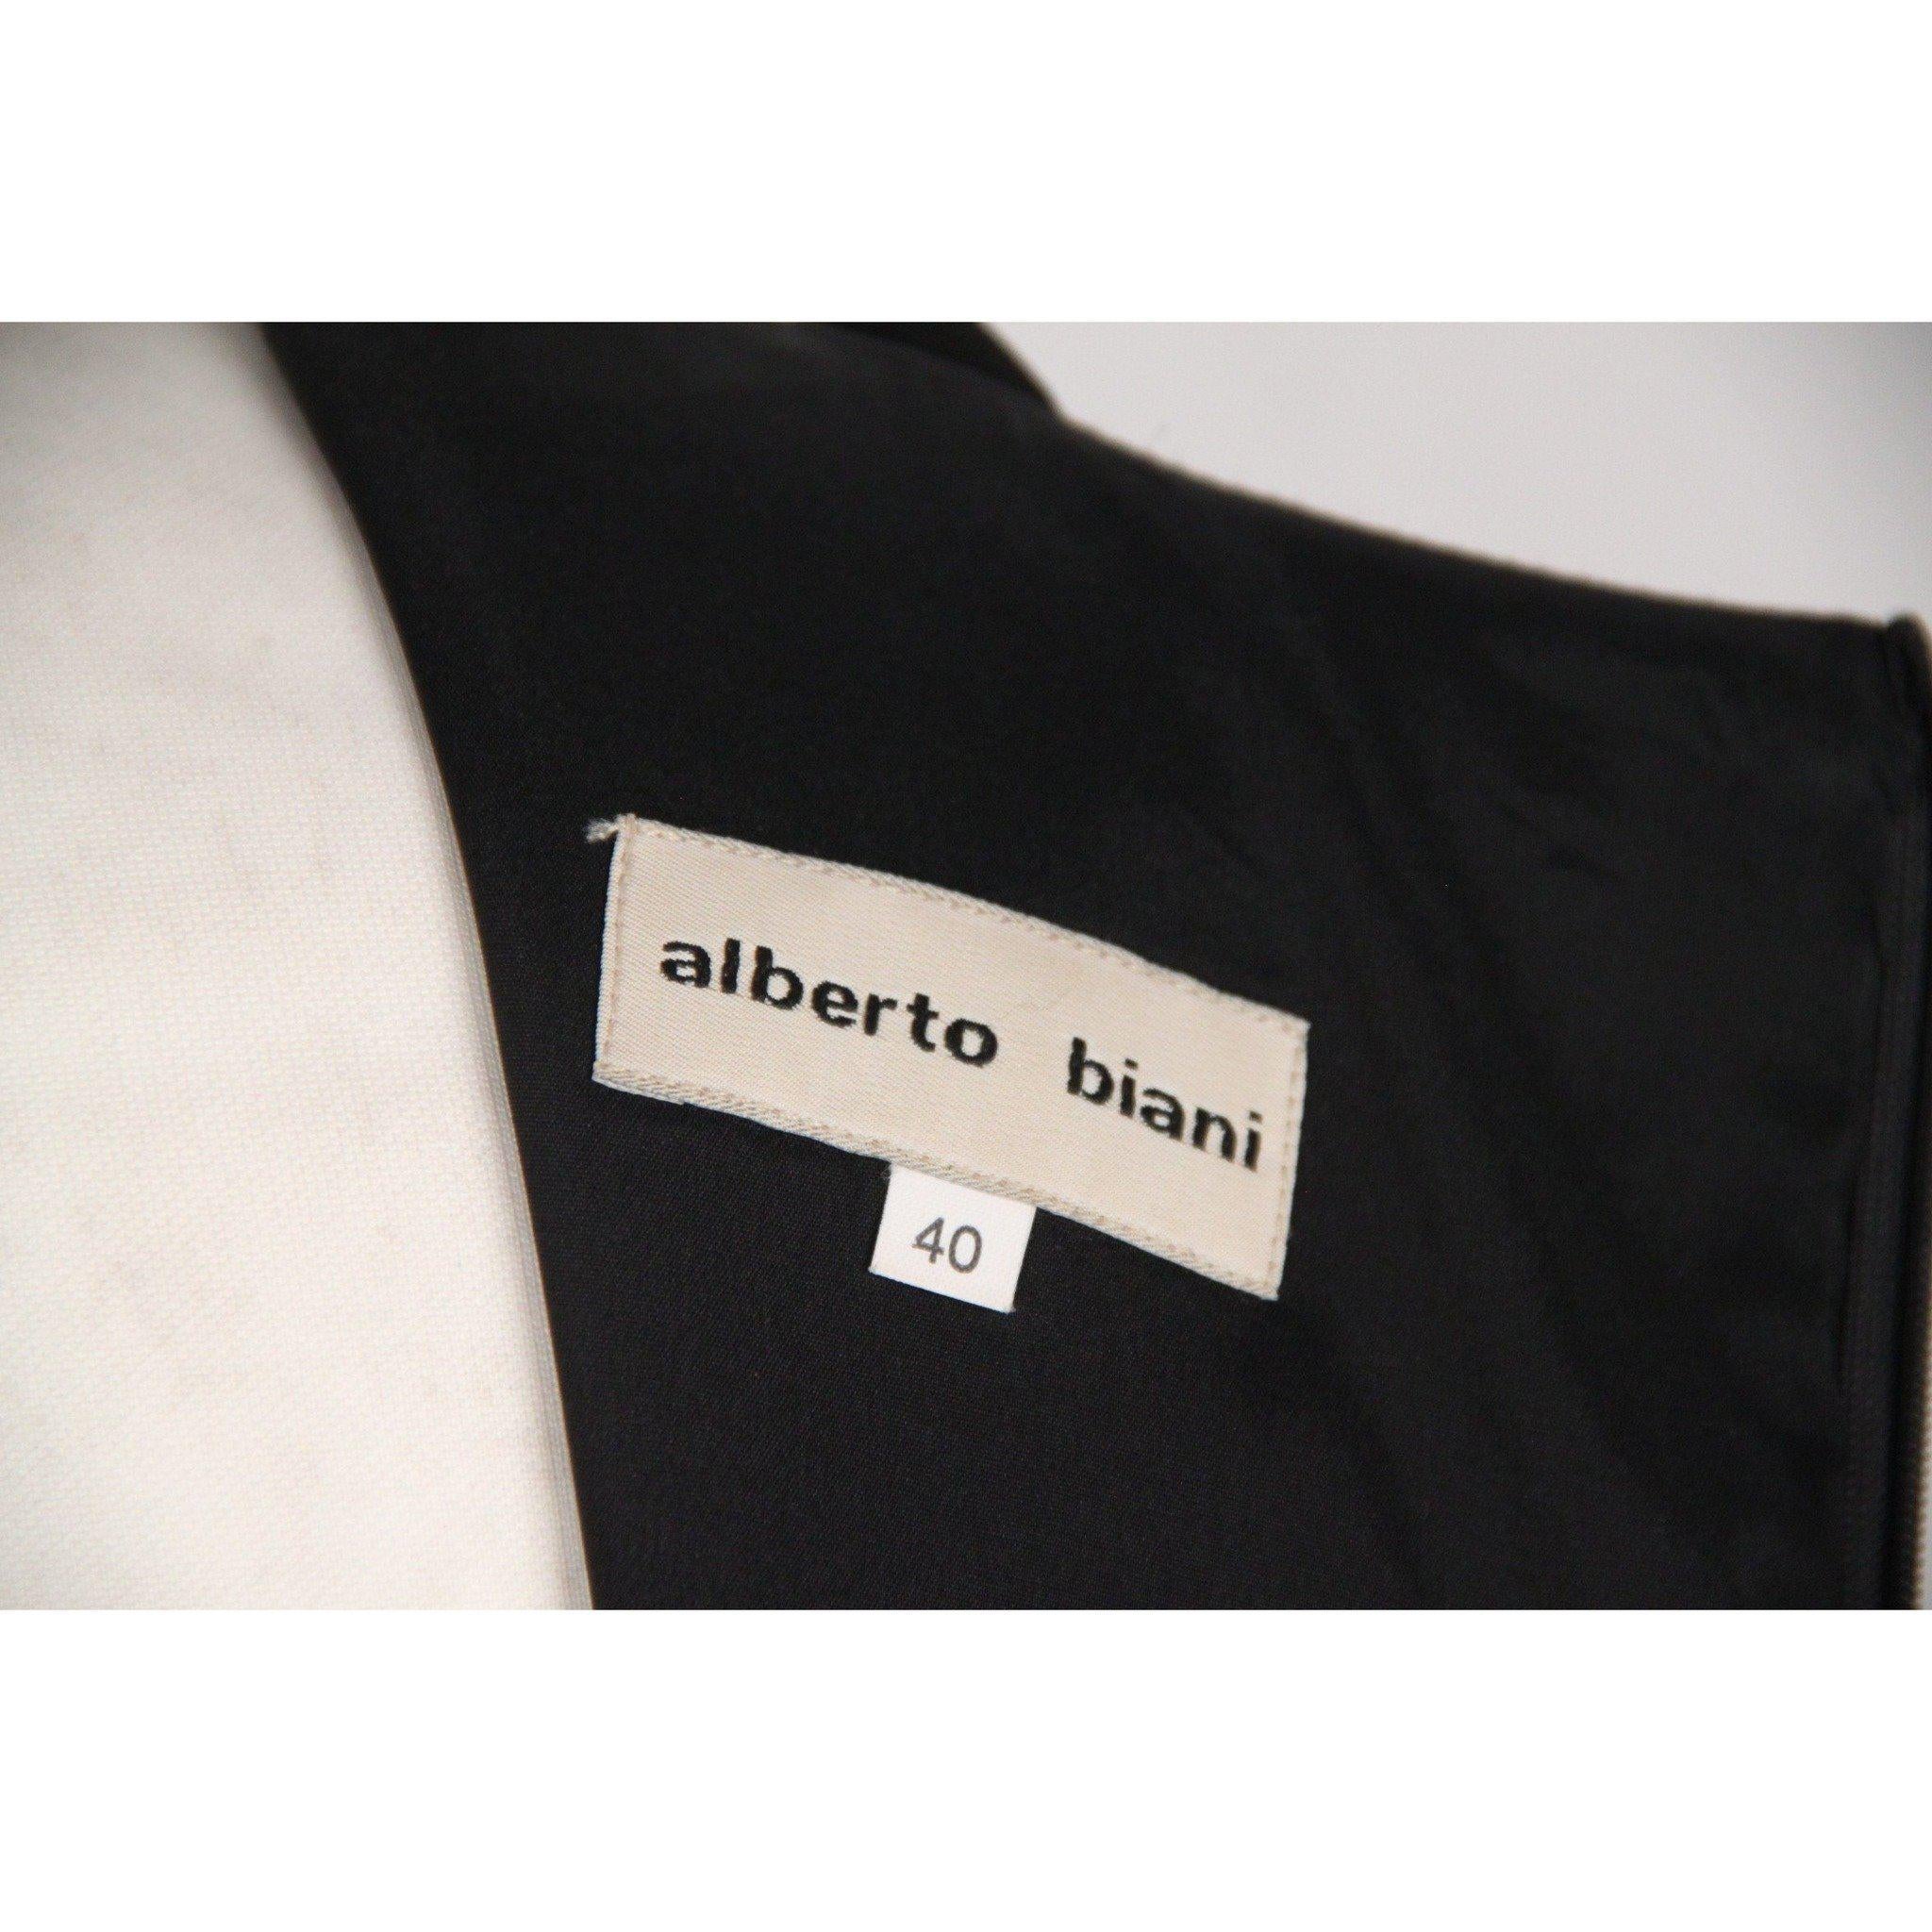 ALBERTO BIANI Black LITTLE BLACK DRESS Sleeveless SIZE 40 4